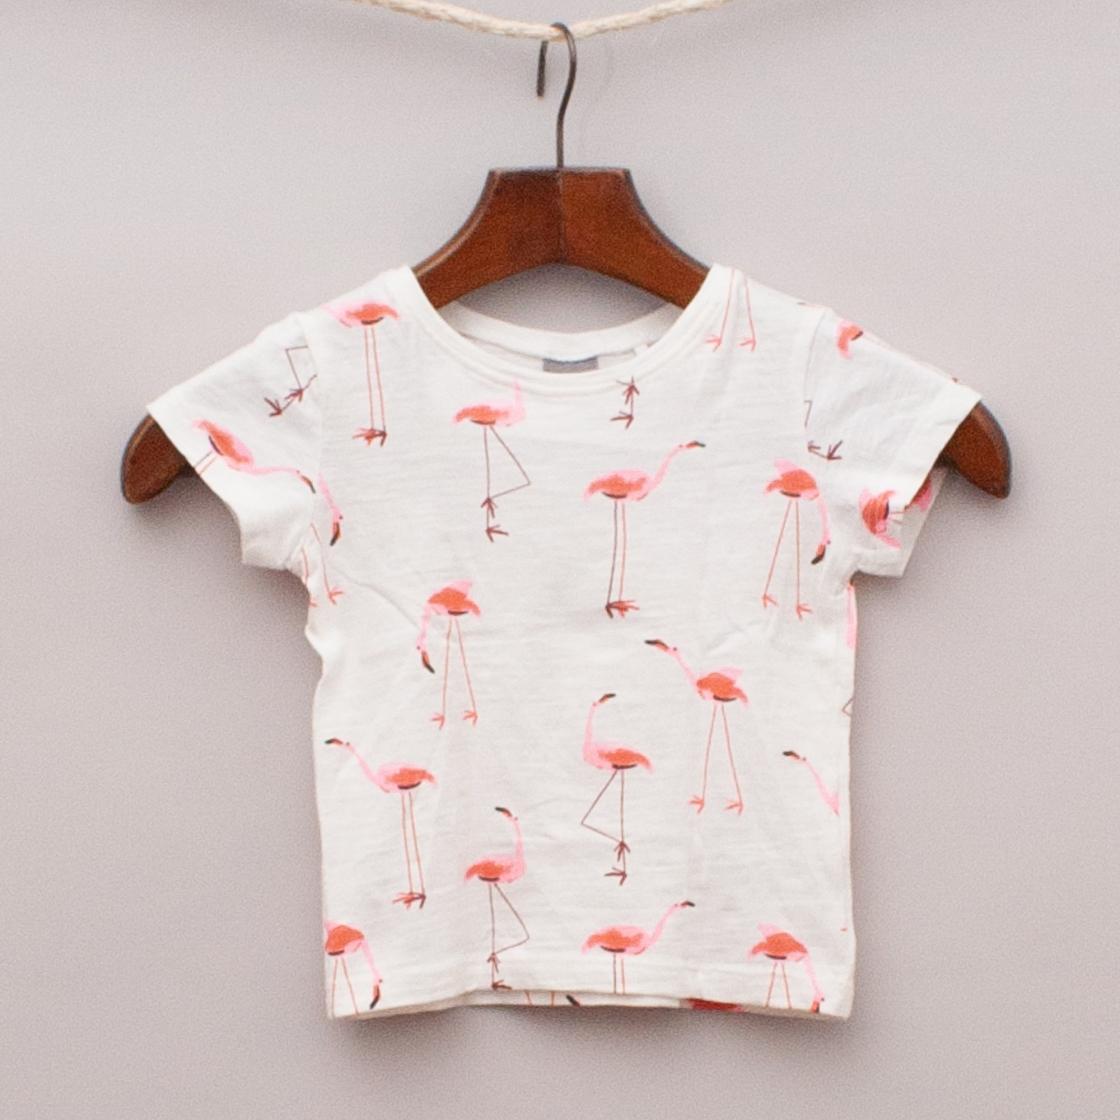 Next Flamingo T-Shirt